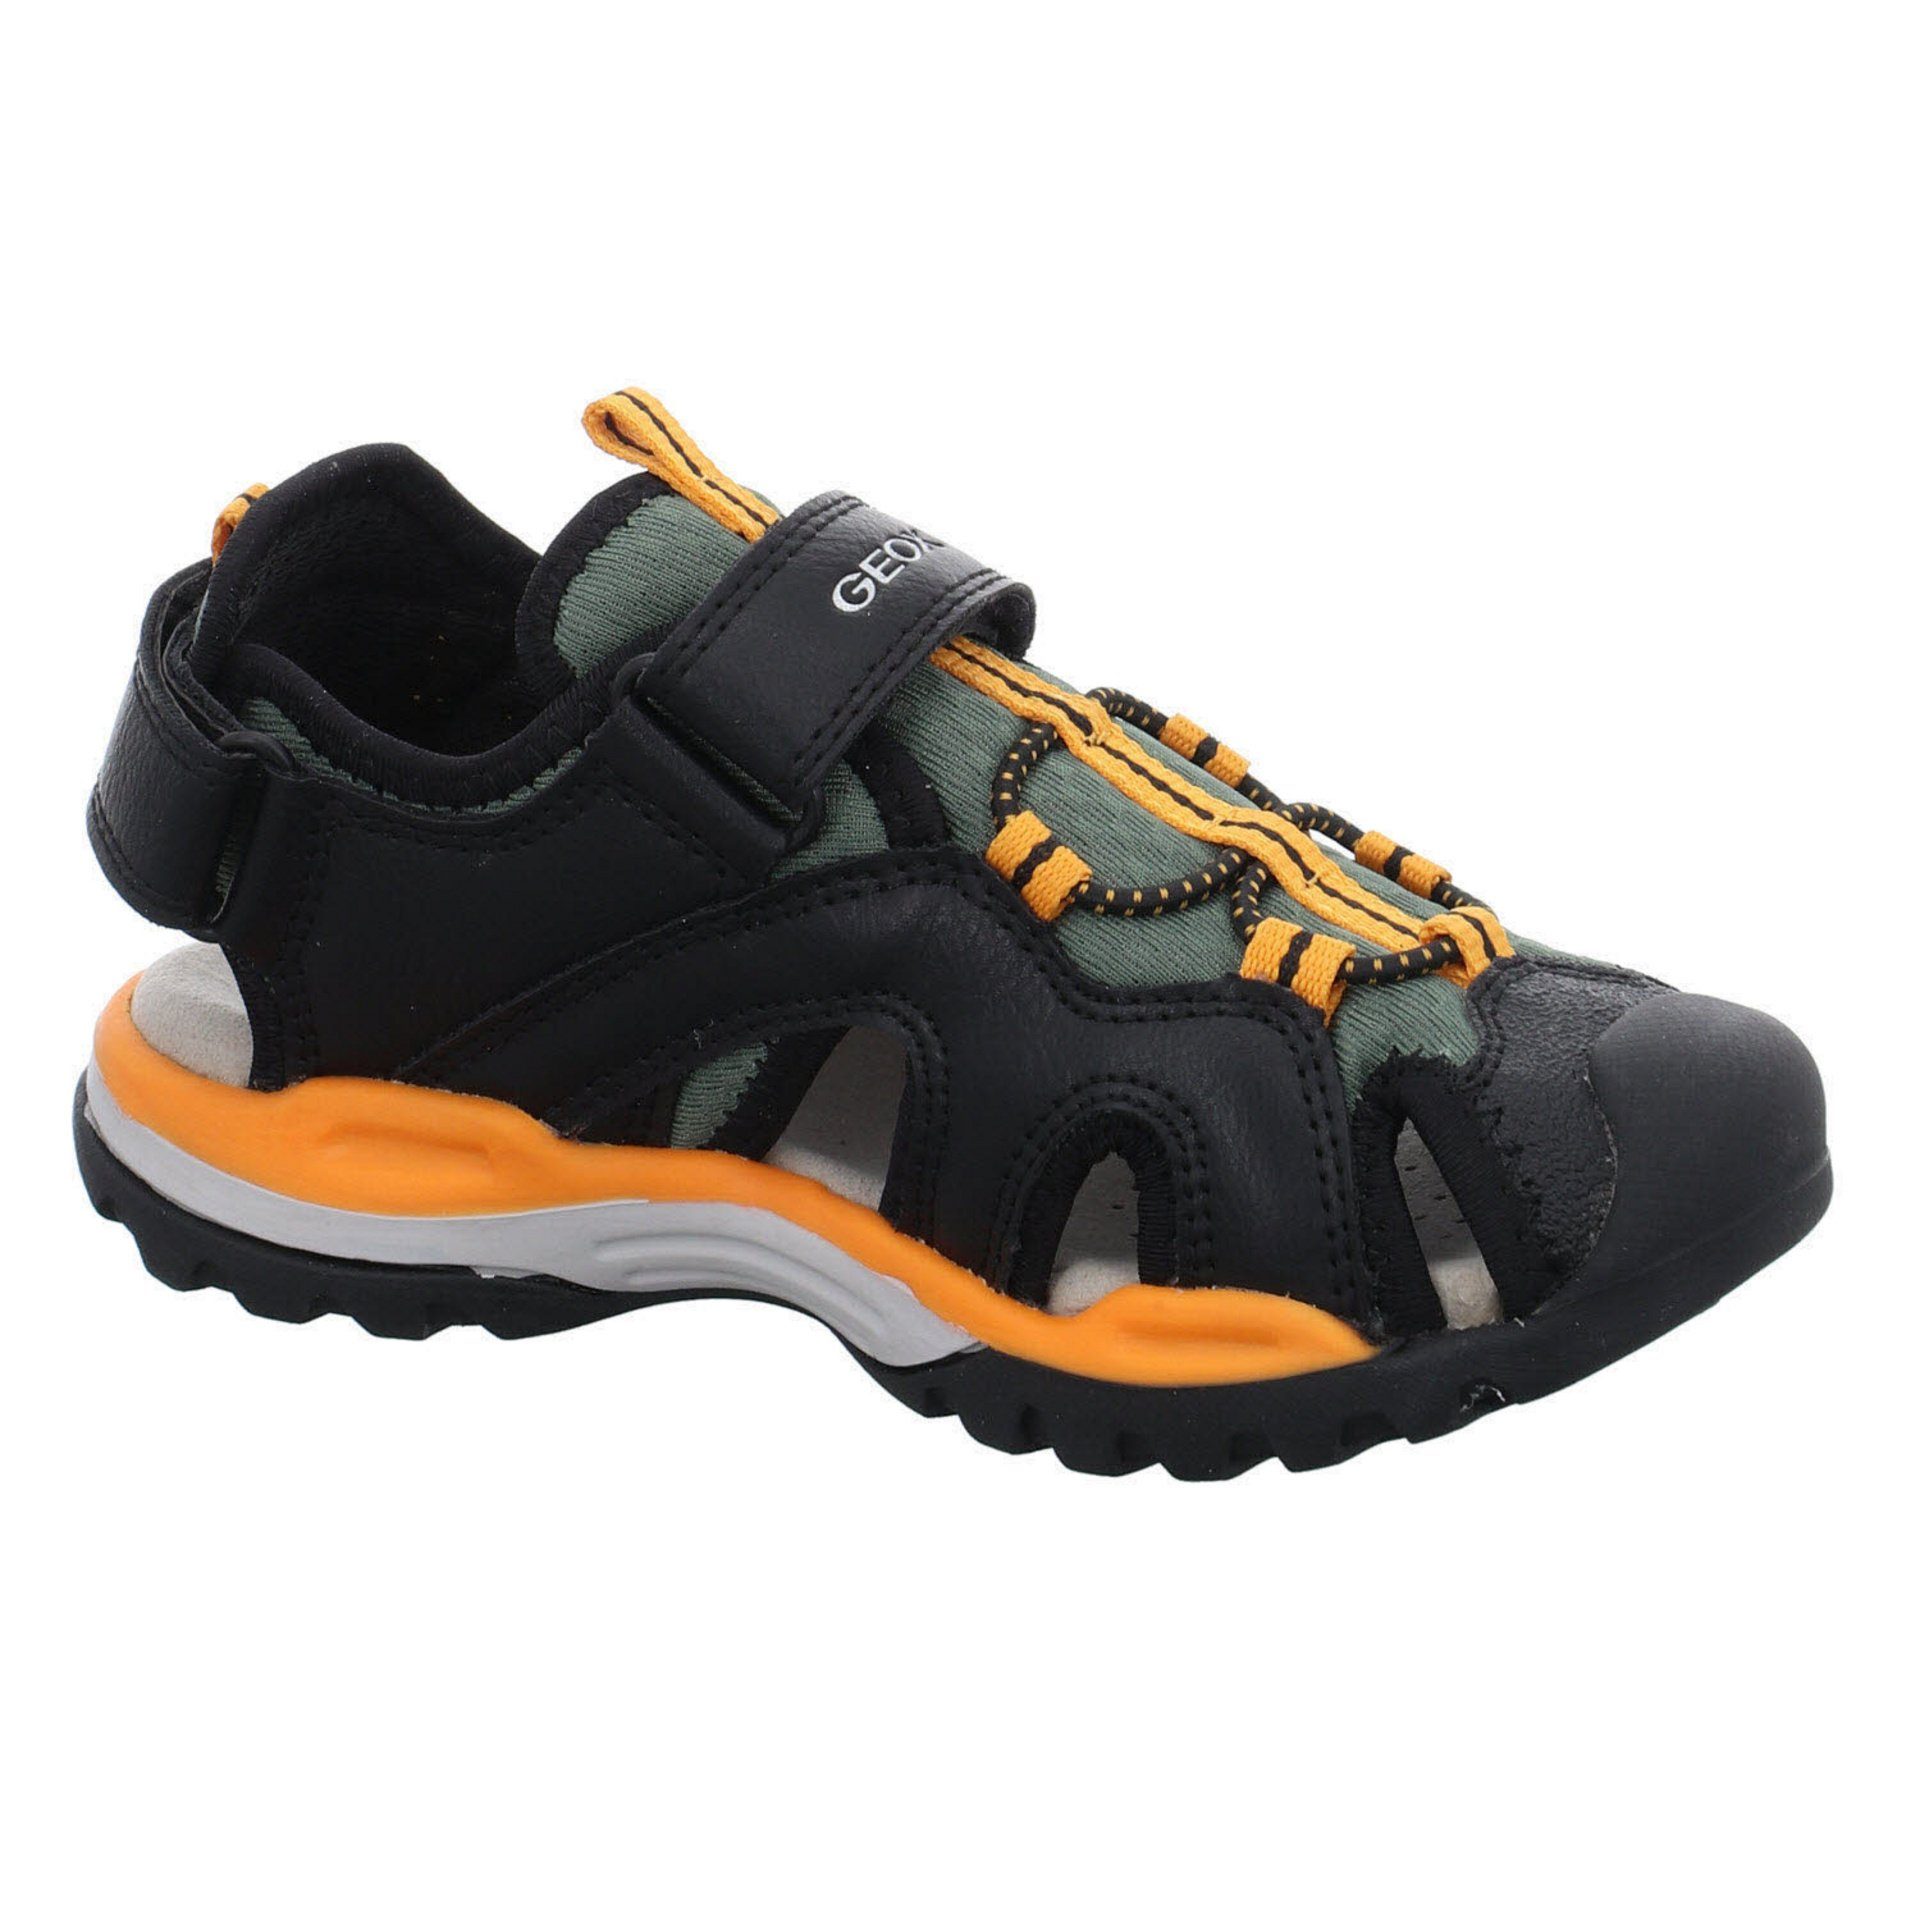 Geox Jungen Sandalen Schuhe Borealis Sandale Schwarz Outdoorsandale Orange Synthetikkombination